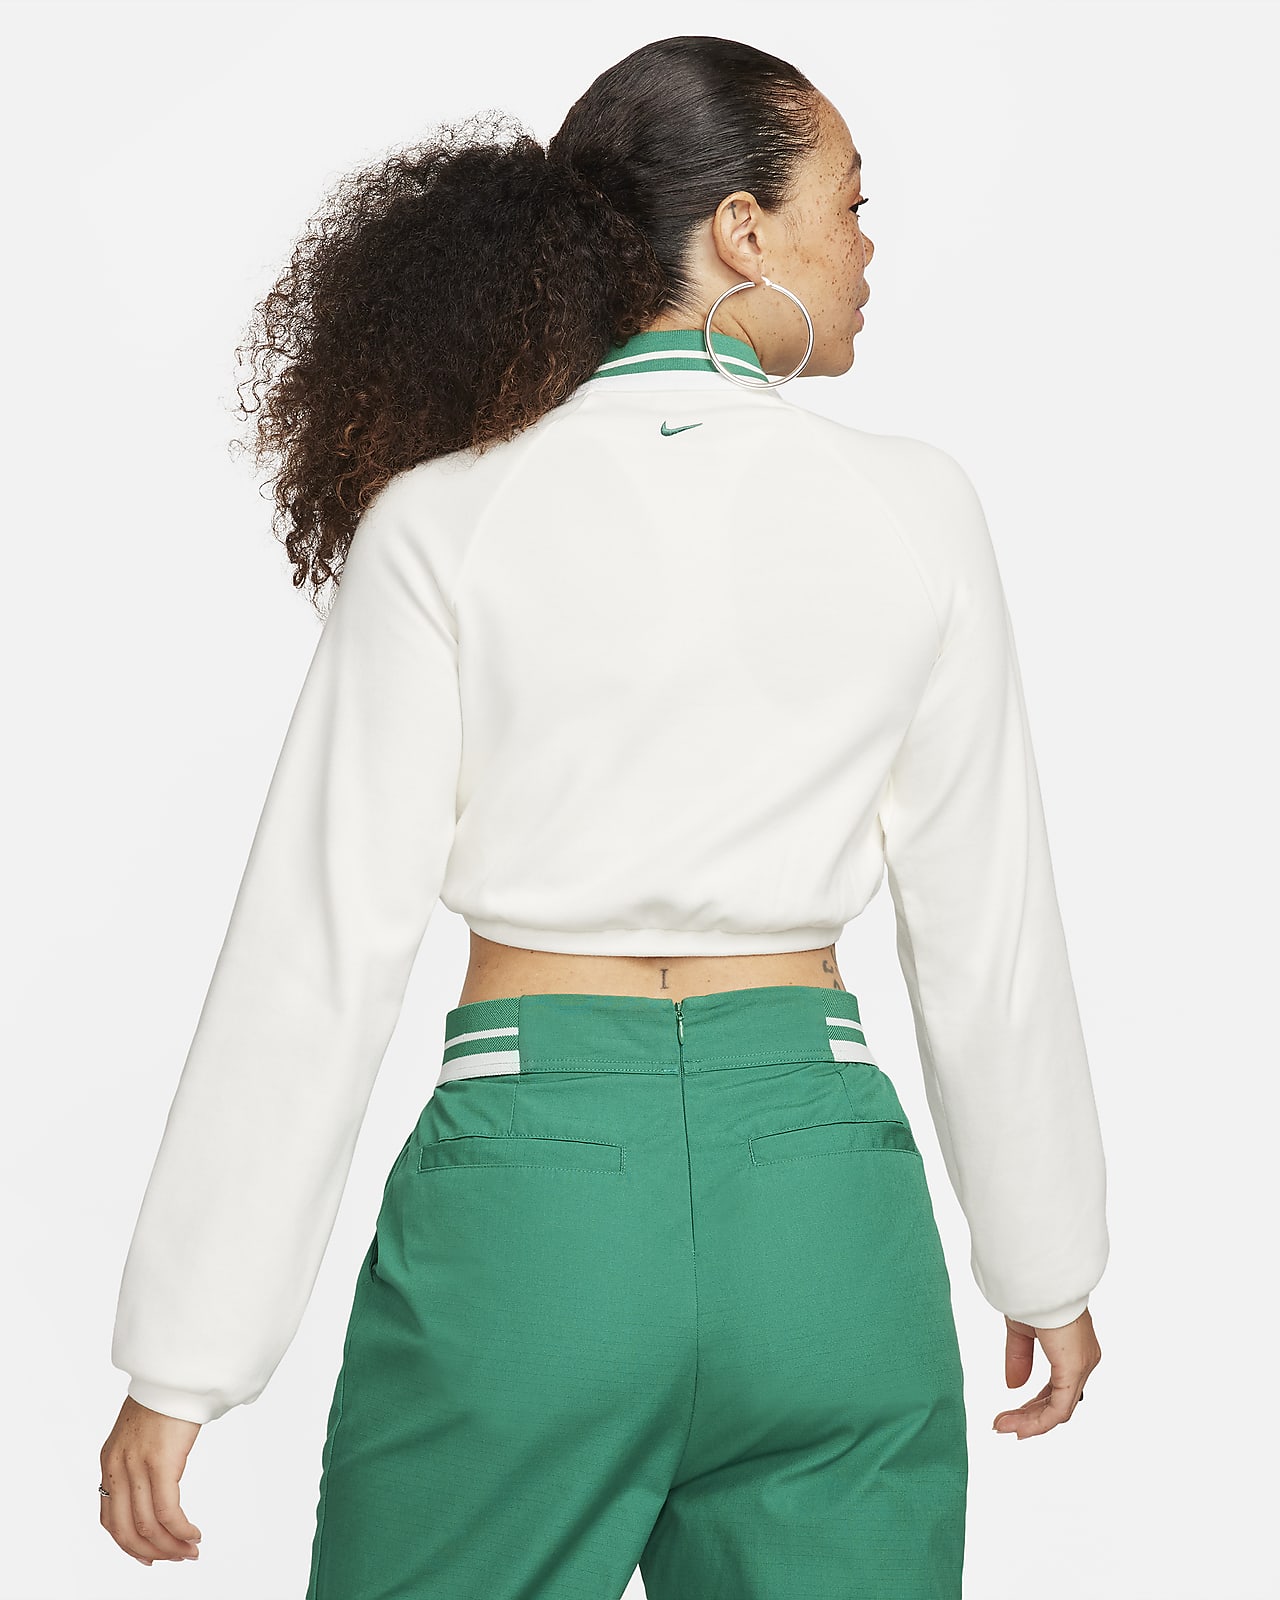 Long-Sleeve Women\'s Nike Collection Cropped Polo. Sportswear